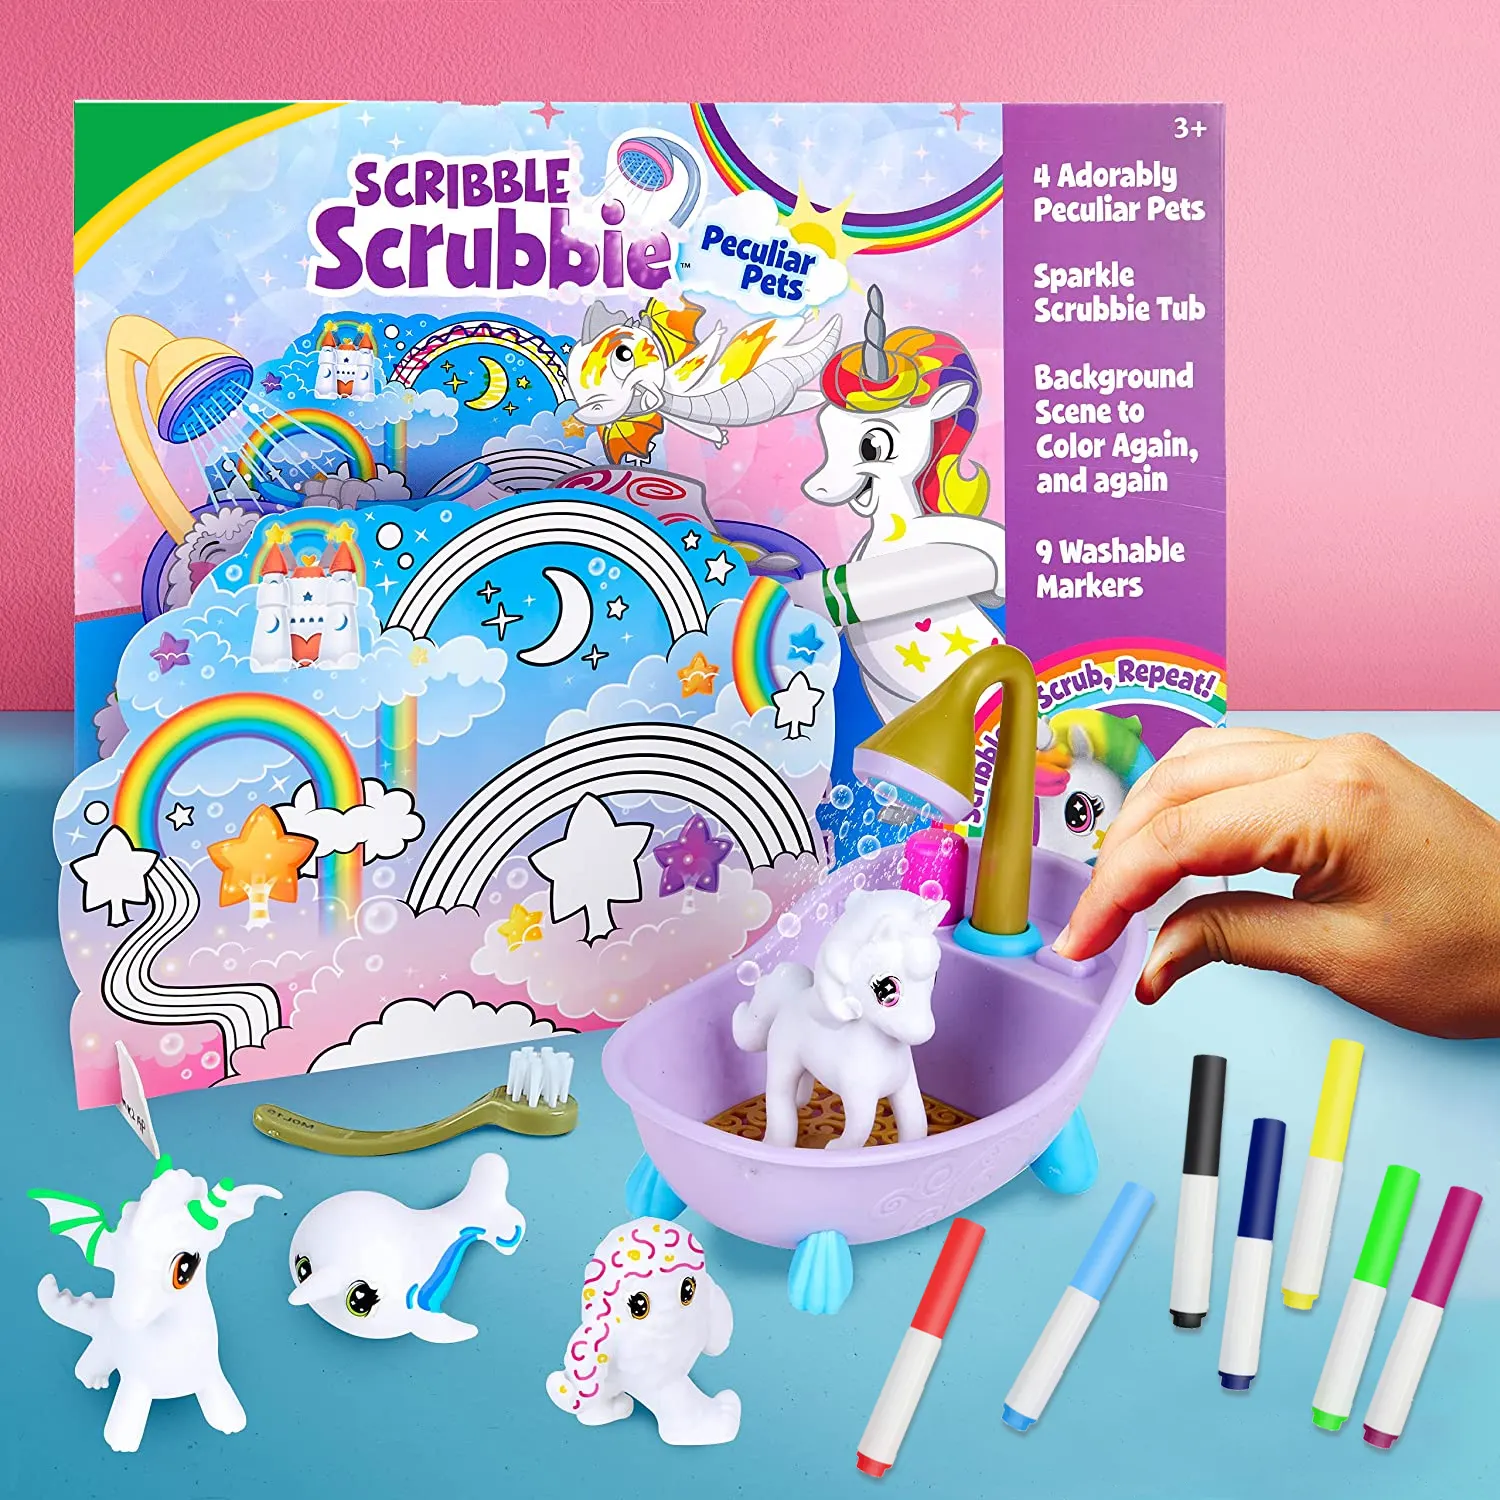 KHY-Set de bolígrafos de Pascua para niños y niñas, Set de bolígrafos con diseño de grafiti, cesta de mascotas, con rotuladores lavables